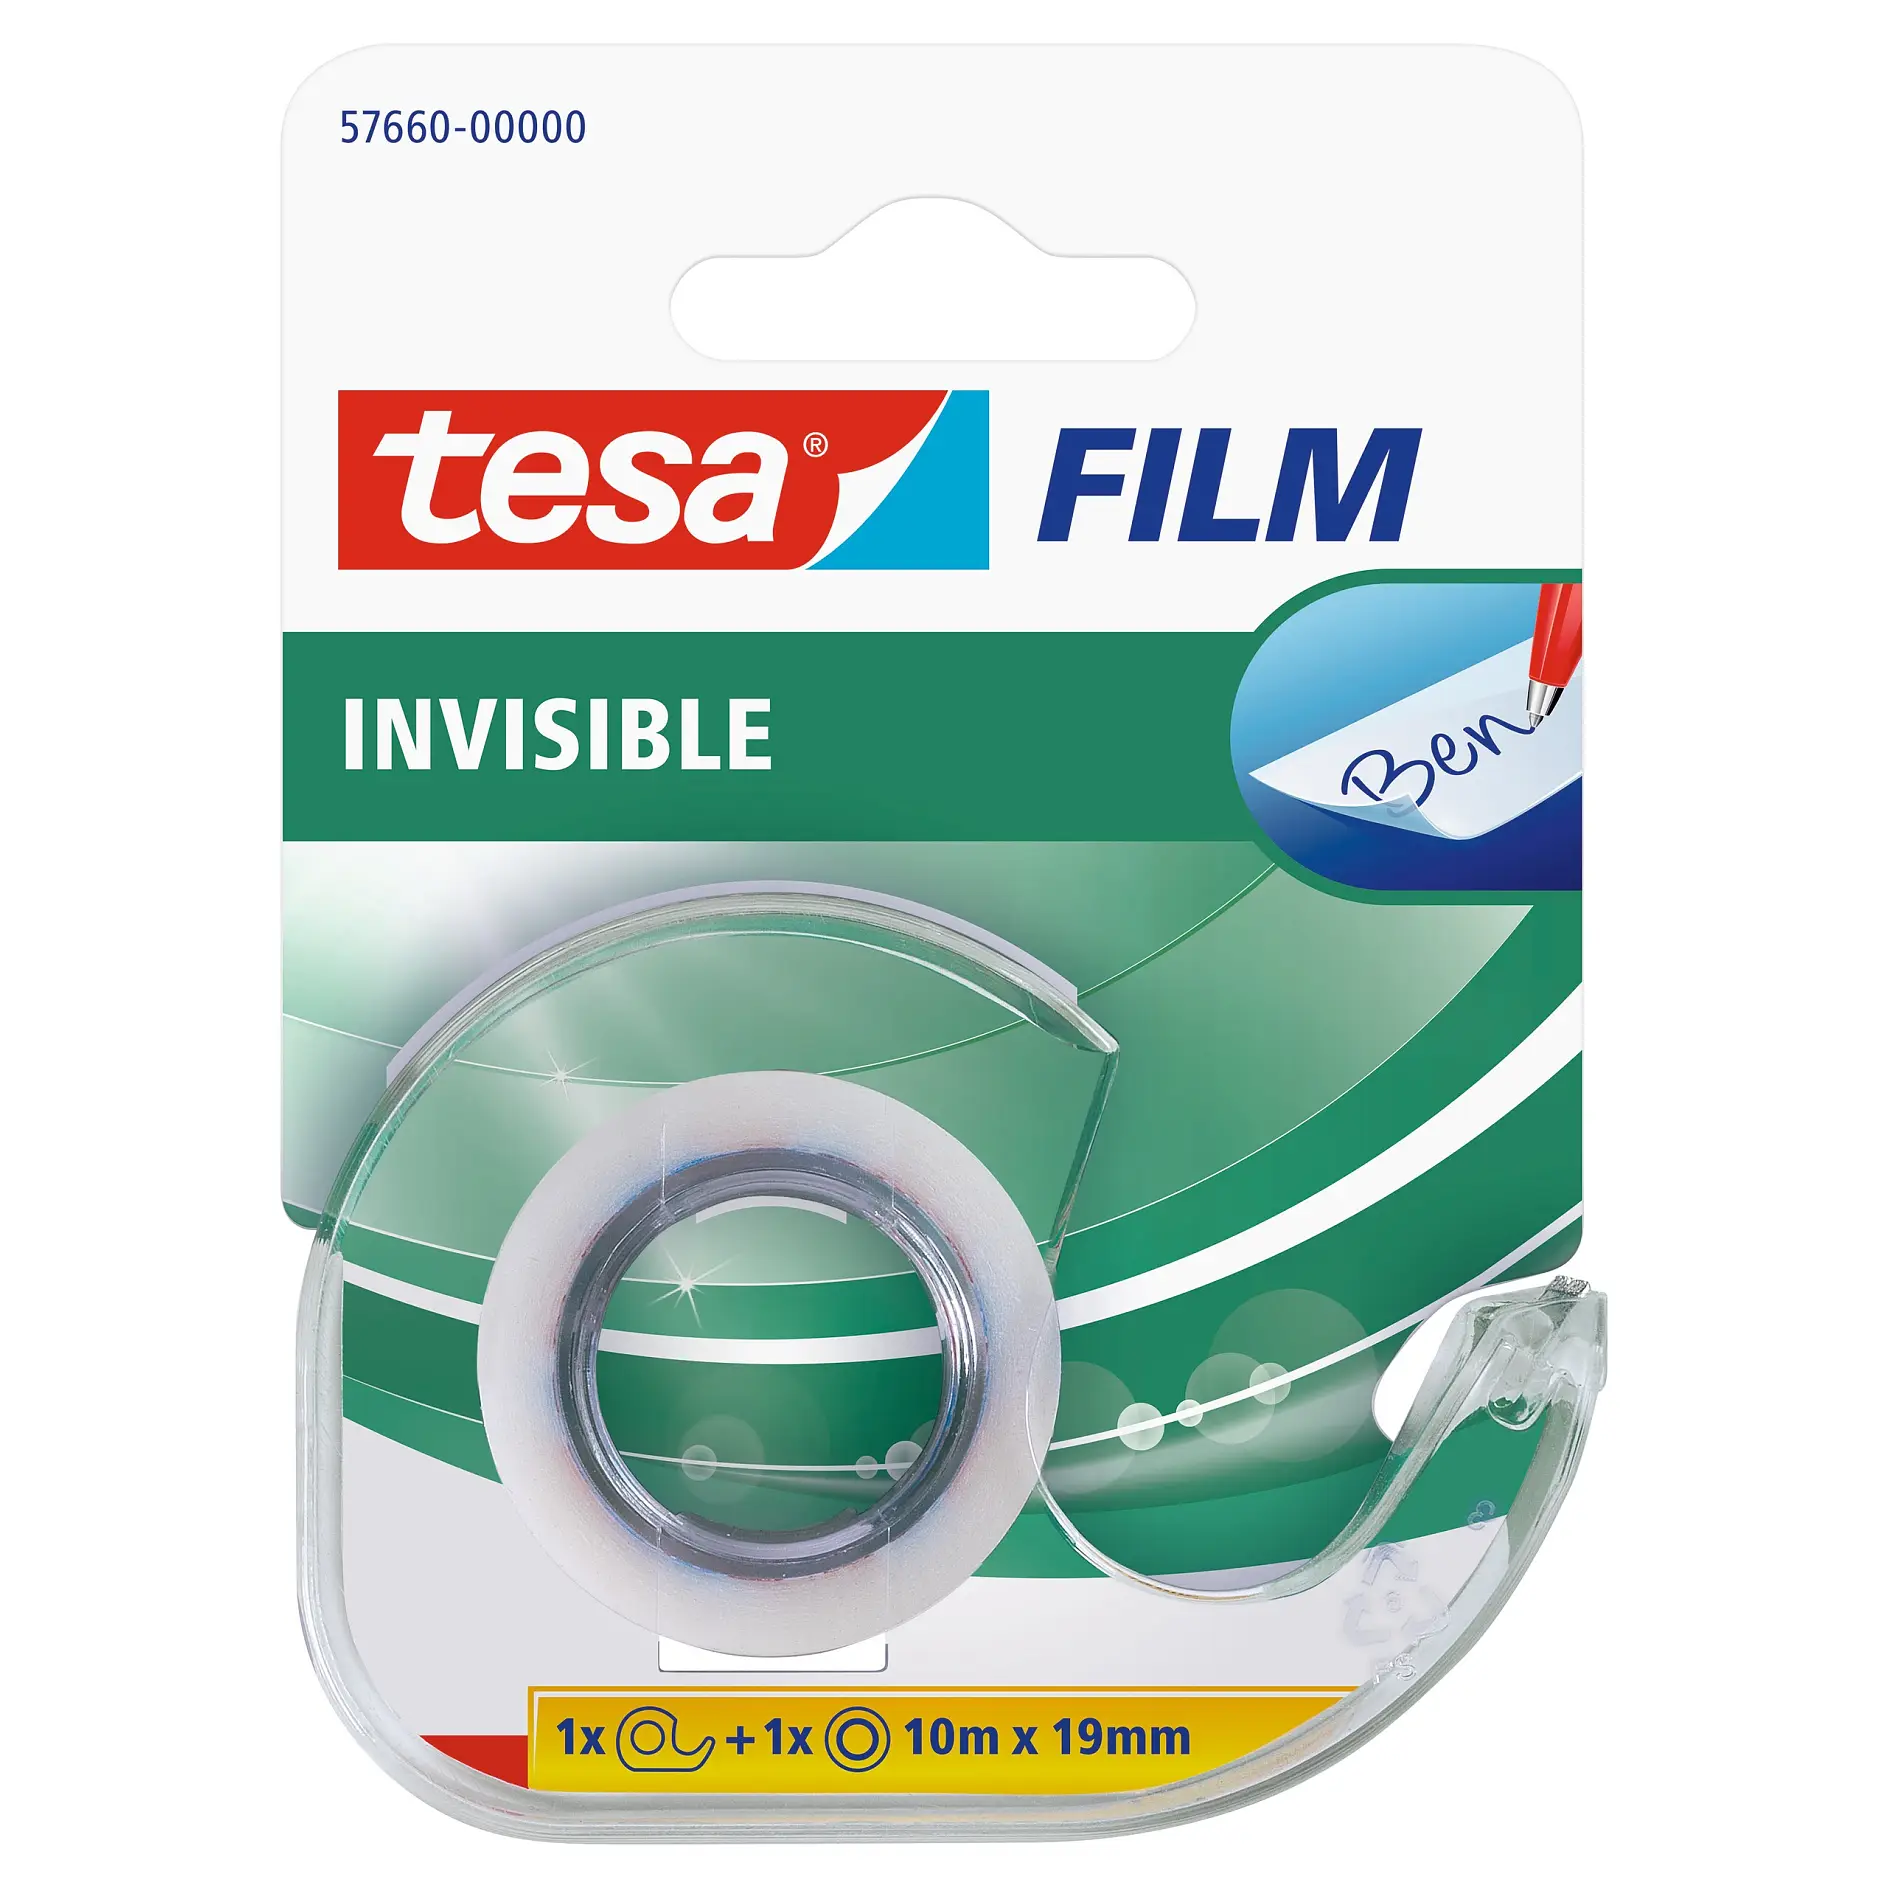 [en-en] 1 x tesafilm Invisible 10m x 19mm + Disposable Dispenser, Hanging Card